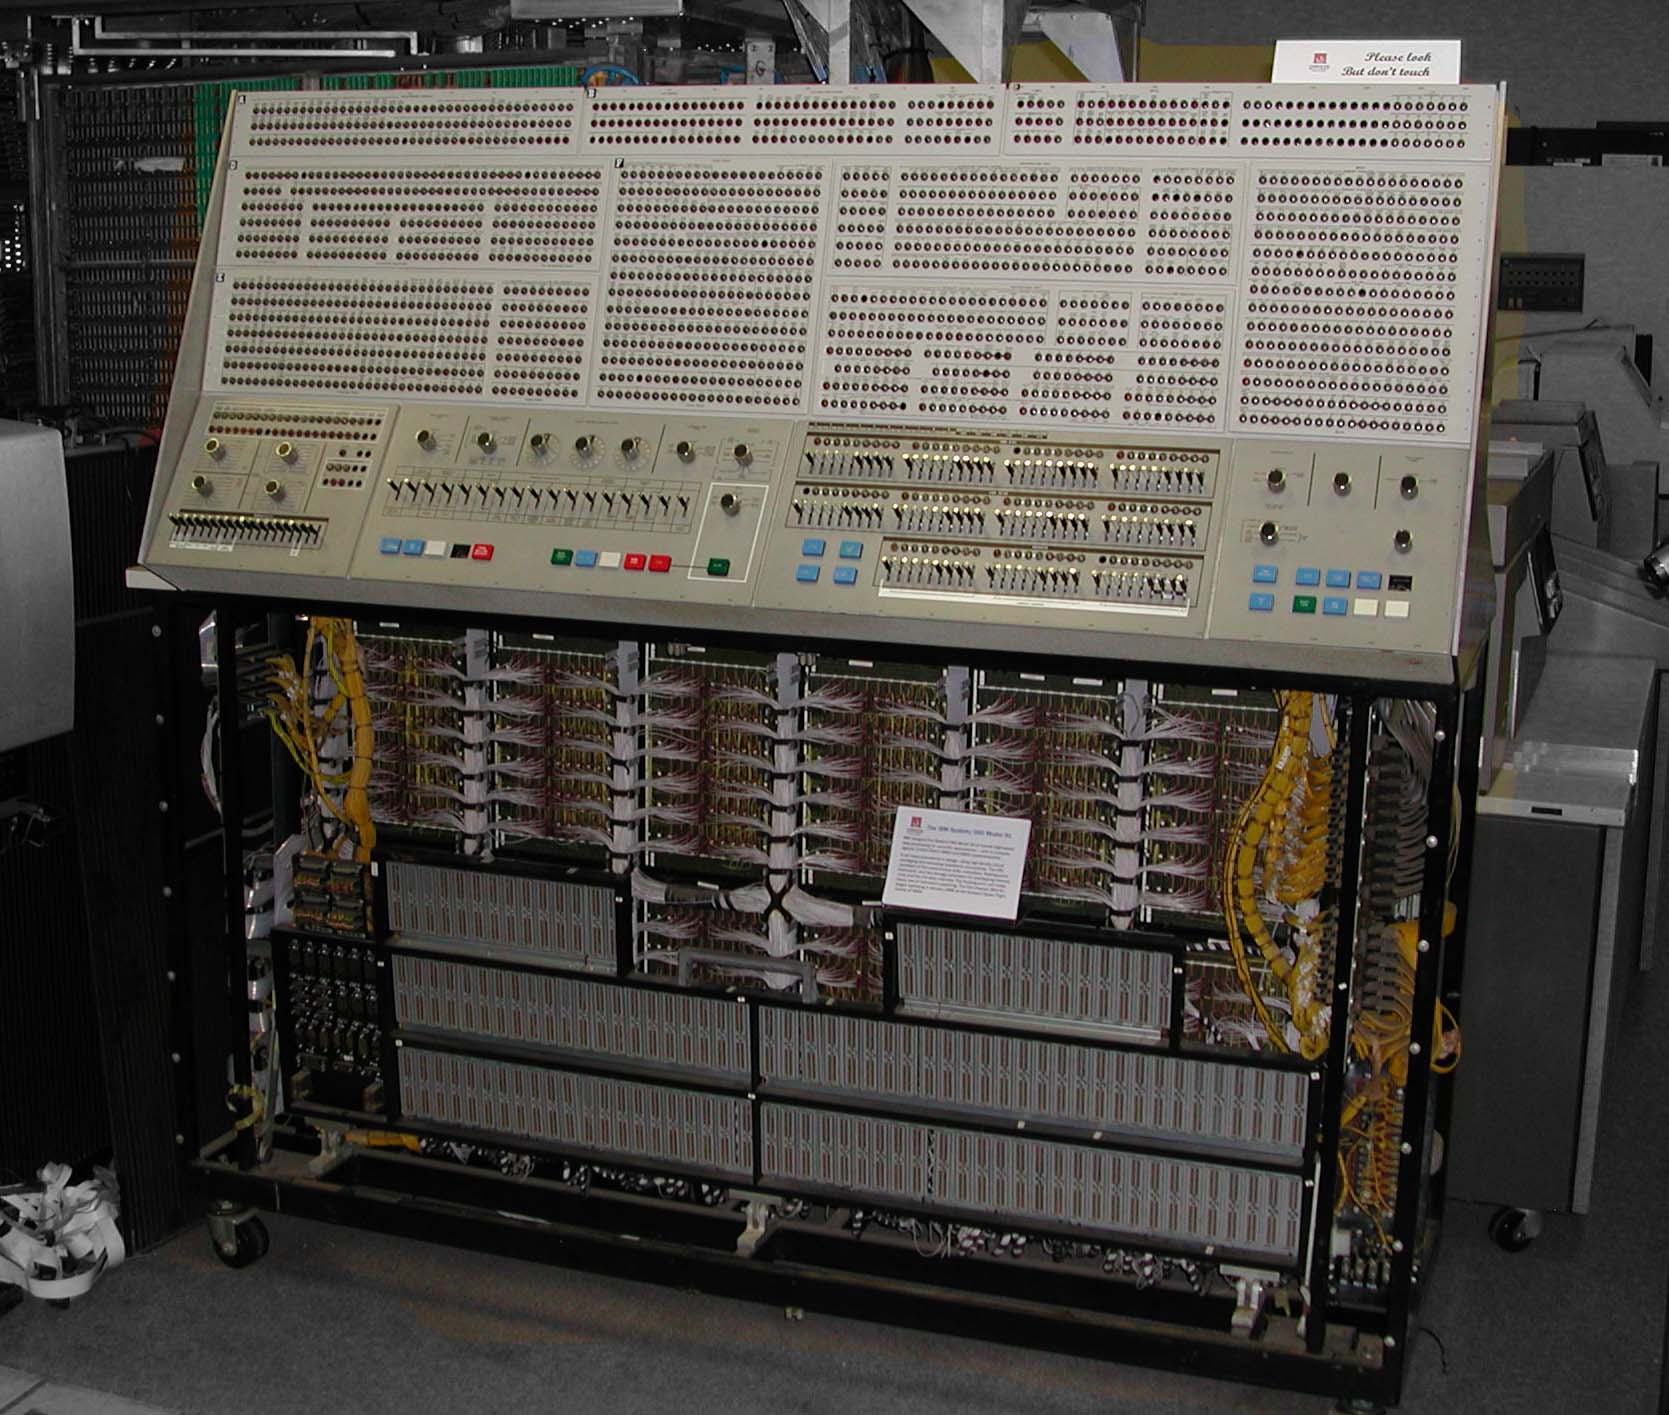 IBM 360/91 control panel at Paul Allen's Living Computer Museum